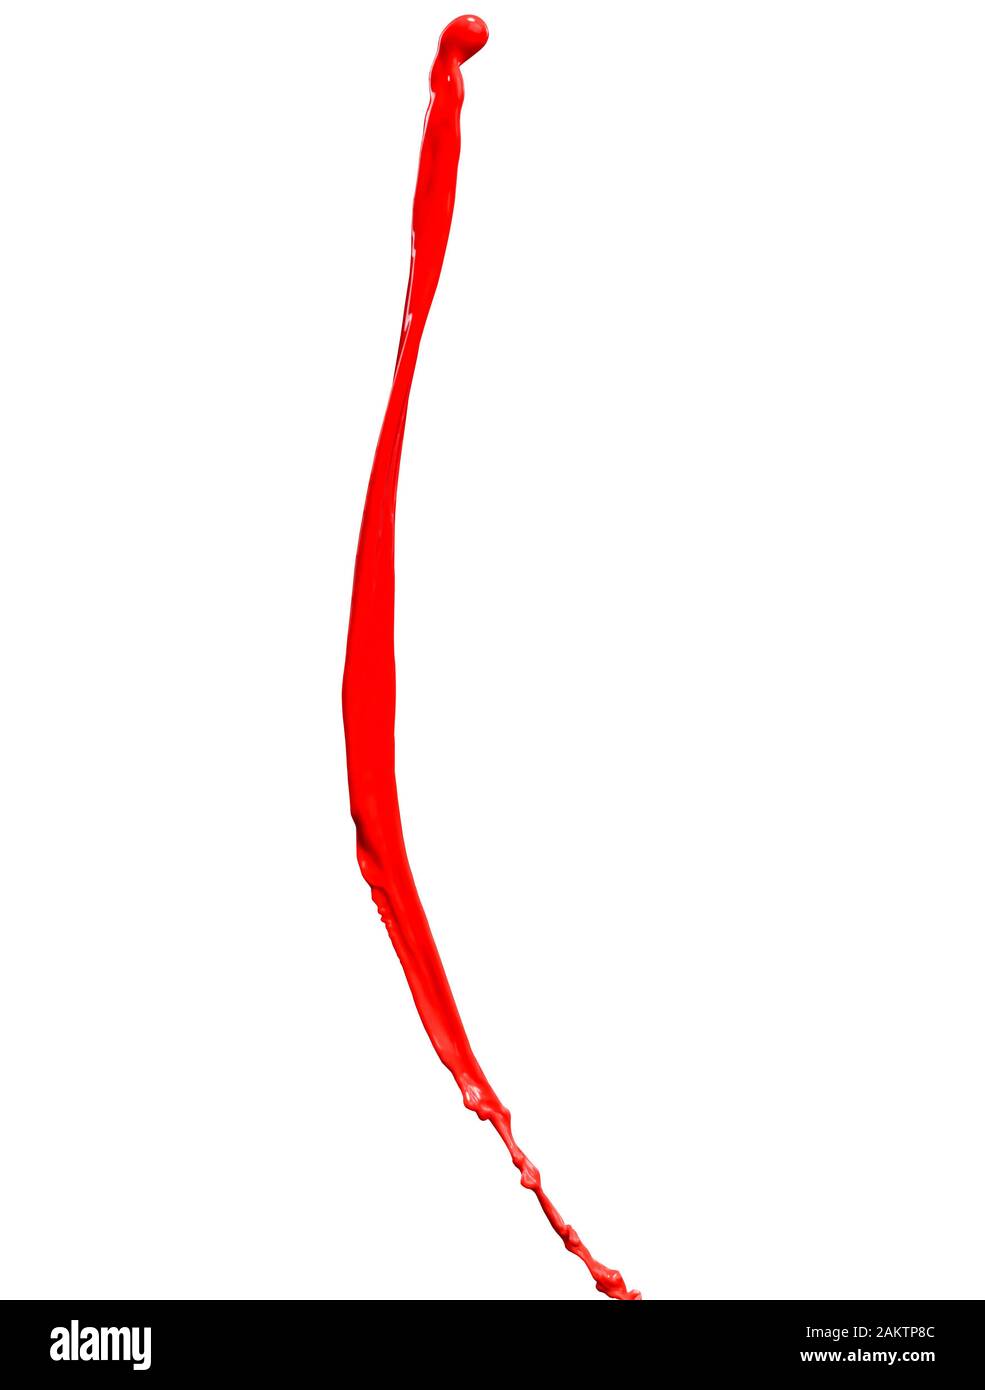 splendido spruzzi di vernice rossa su sfondo bianco Foto Stock